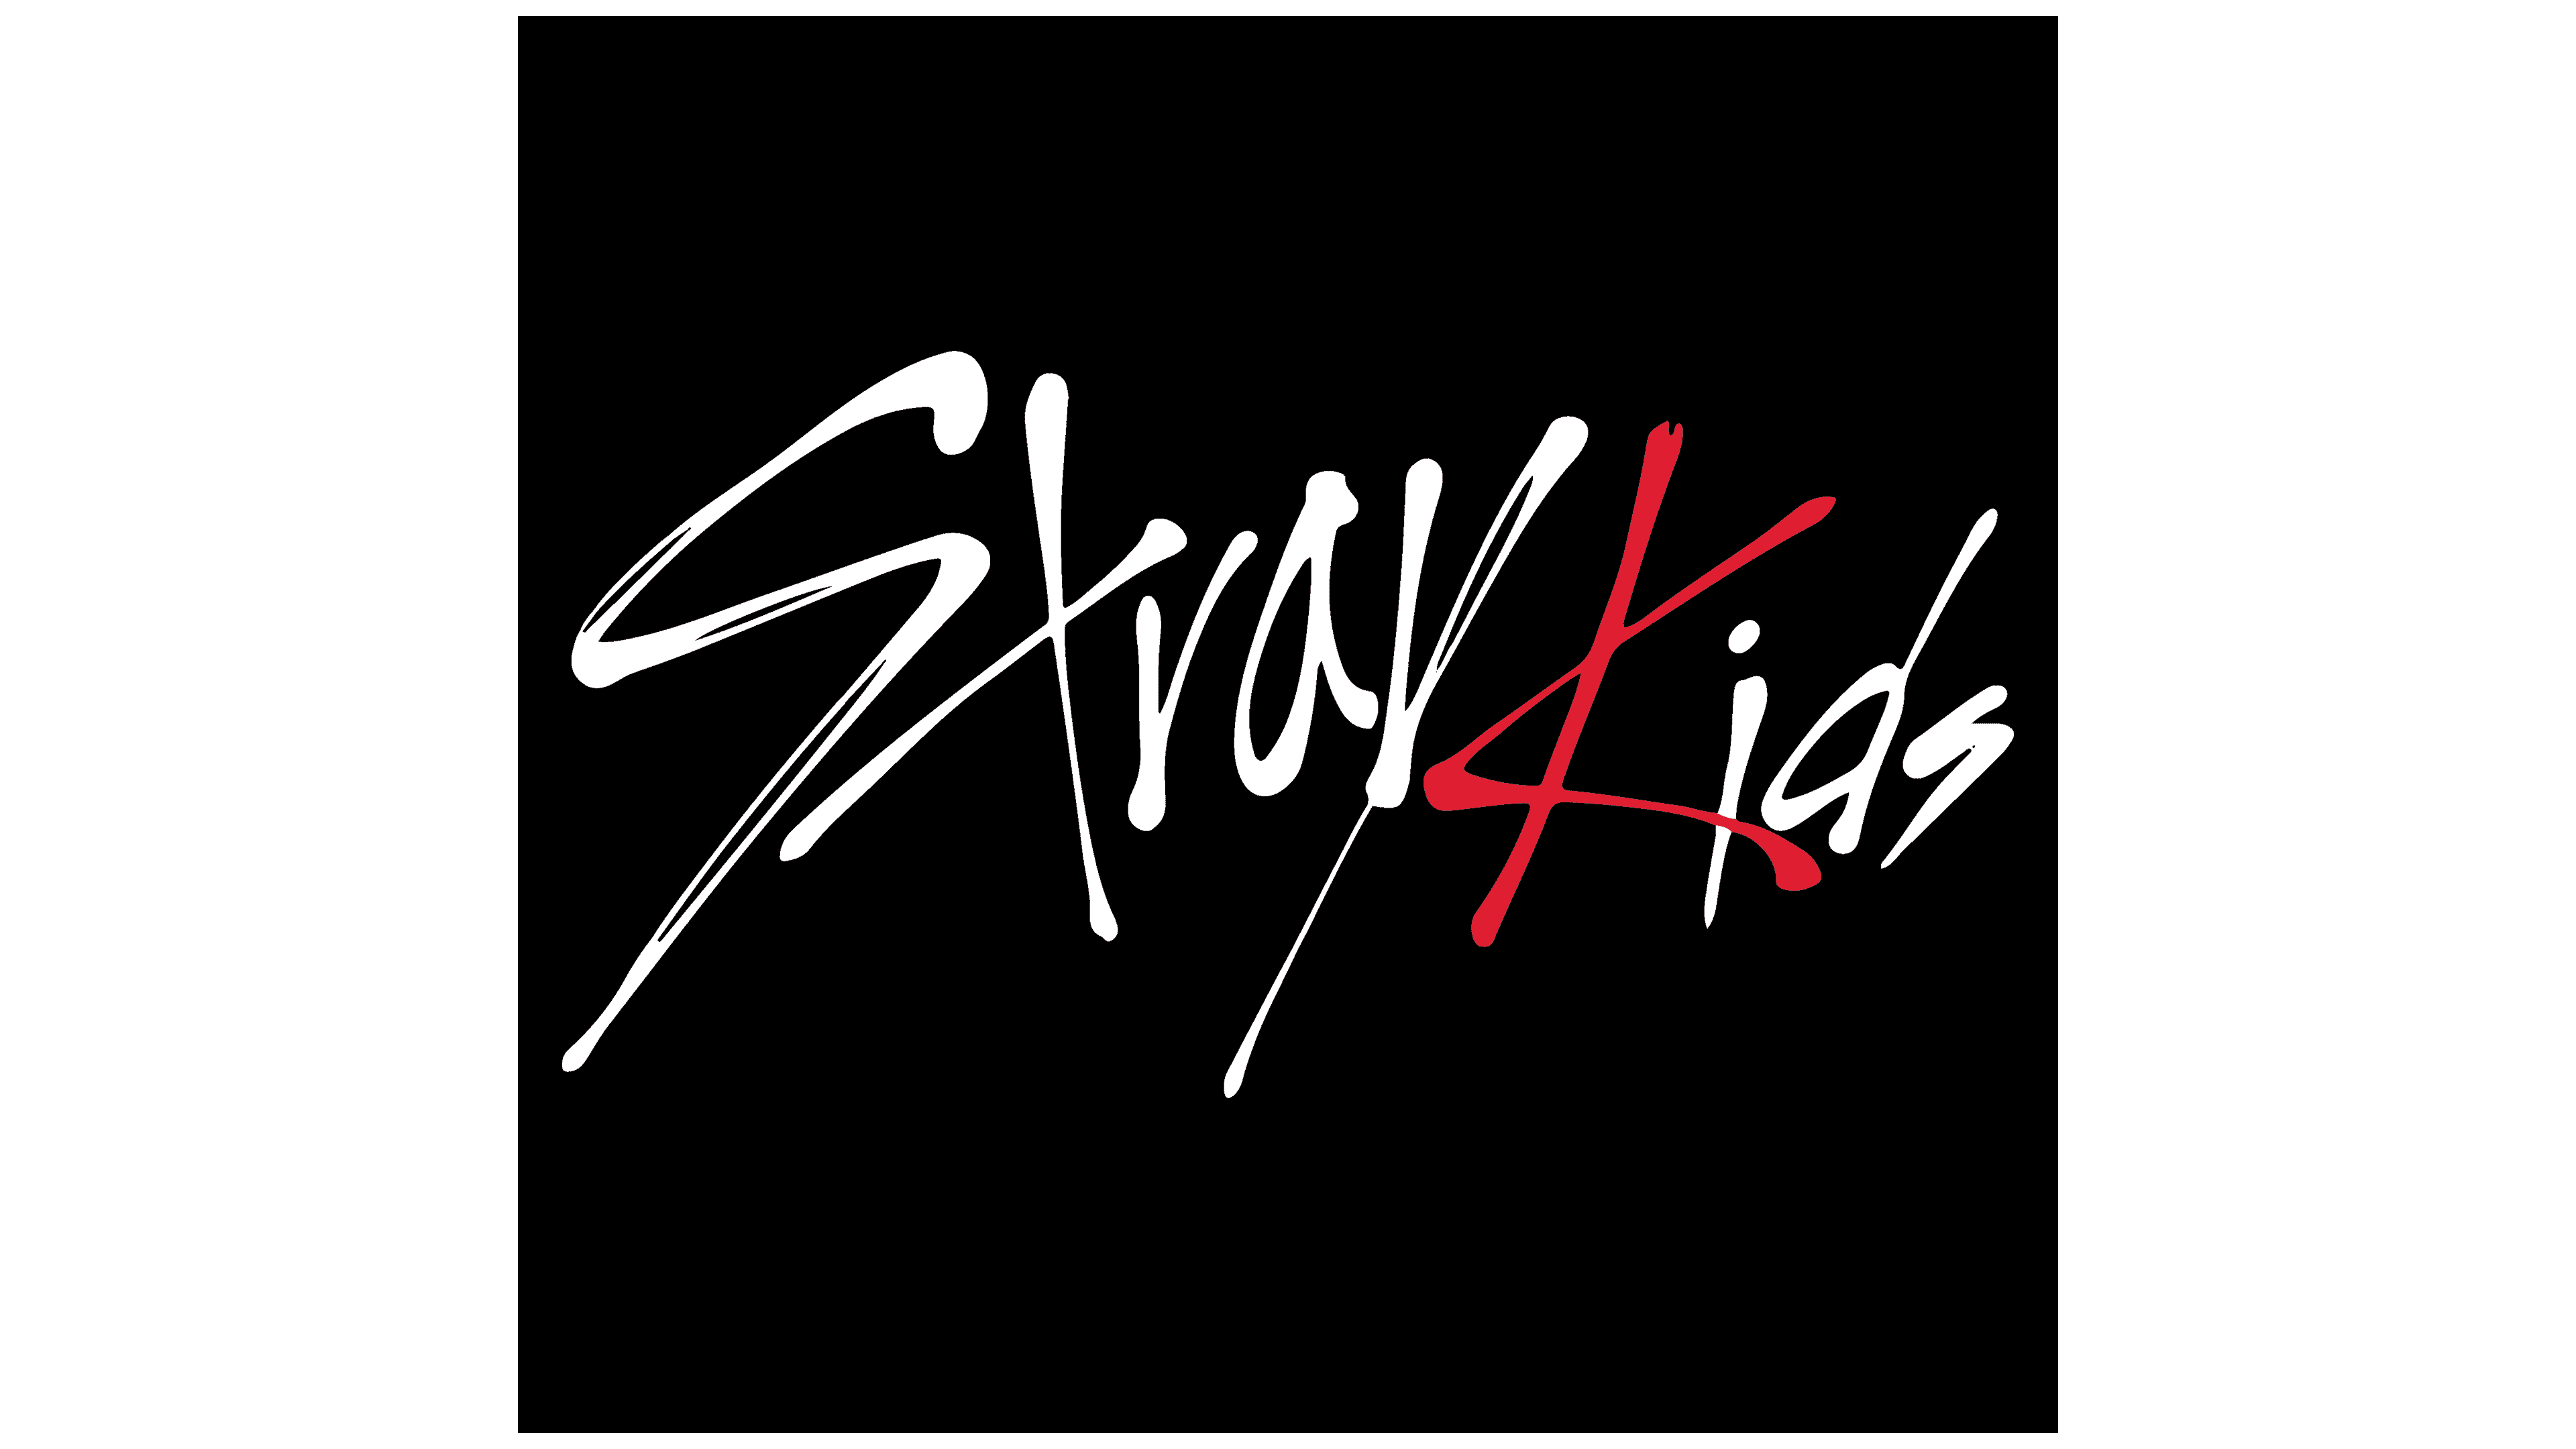 Skz Logo Posters for Sale | Redbubble